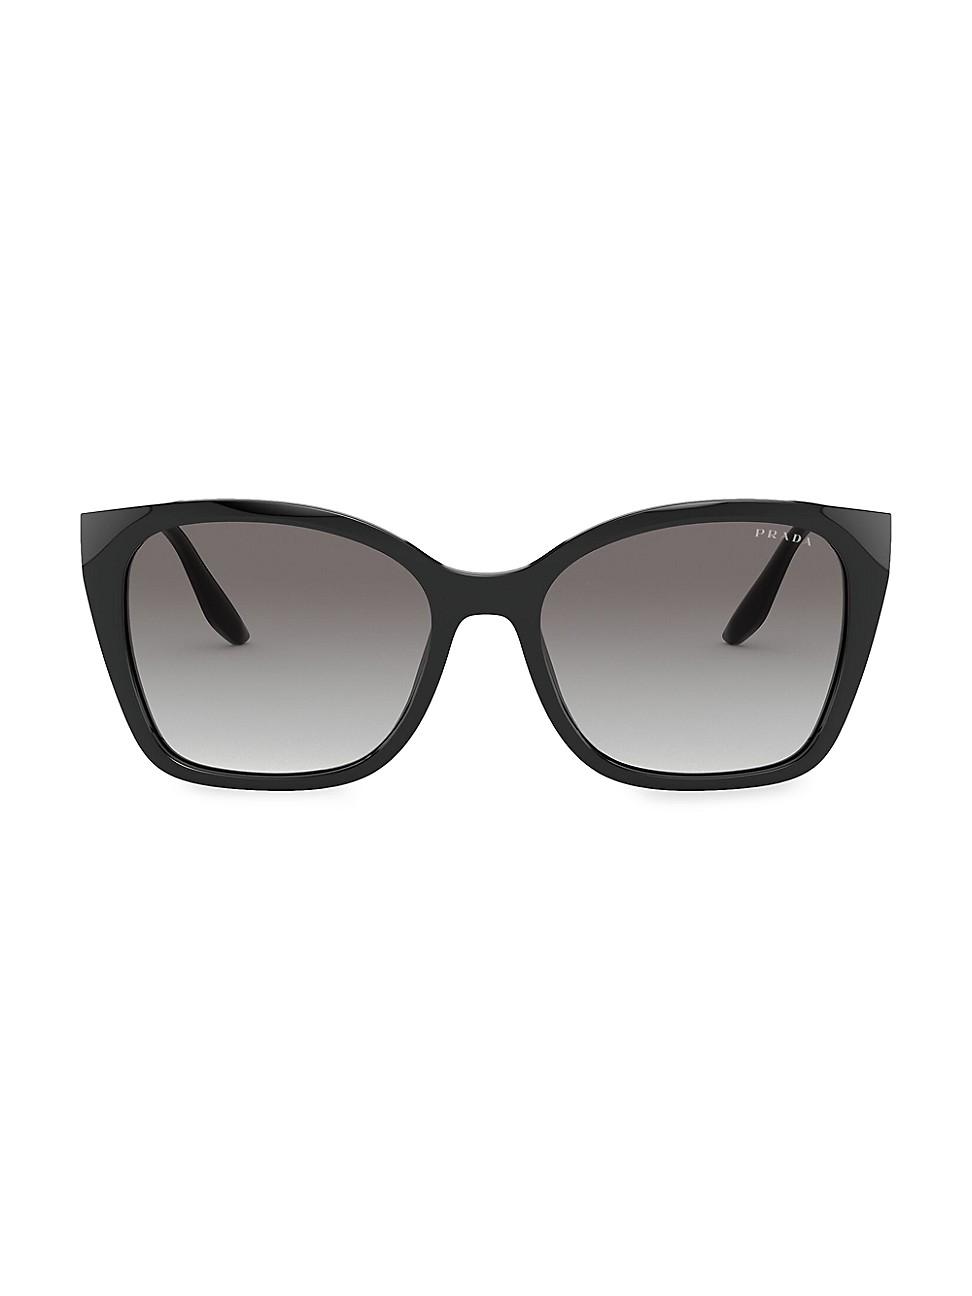 Prada 54mm Cat Eye Sunglasses in Black - Lyst